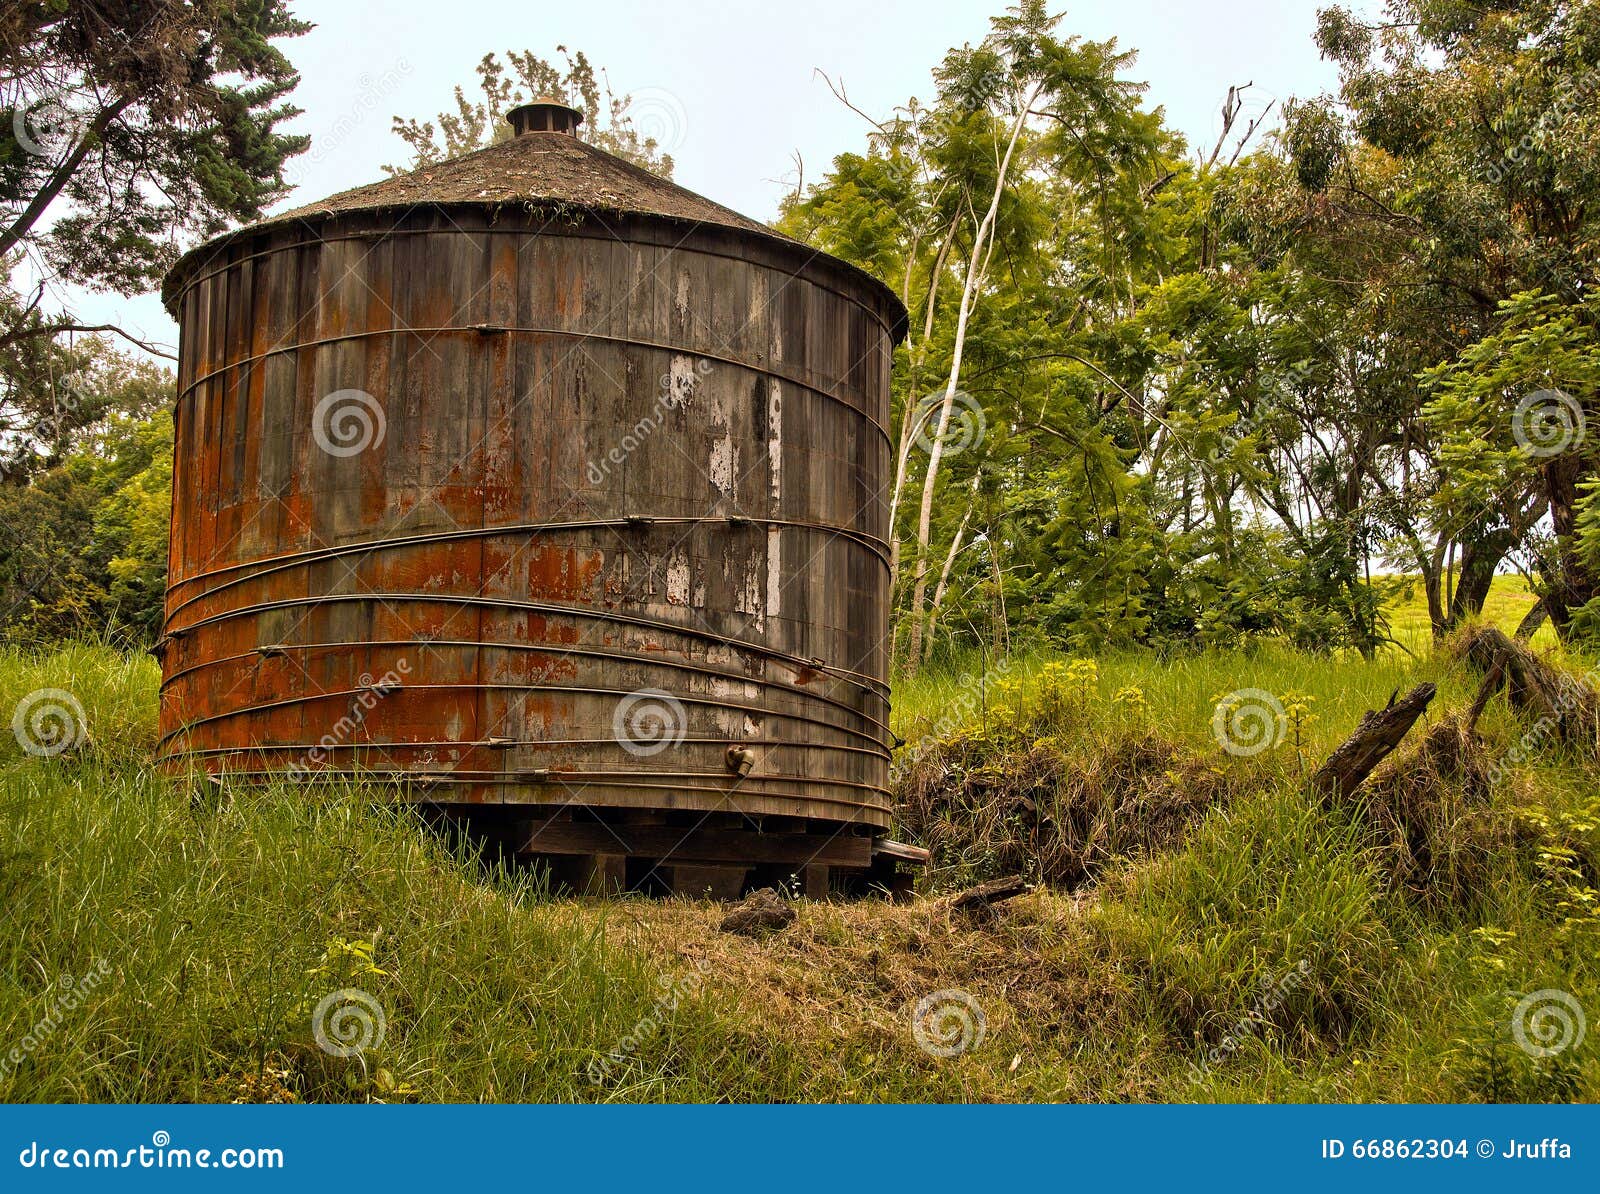 wooden water tank in rural hawaiian backcountry